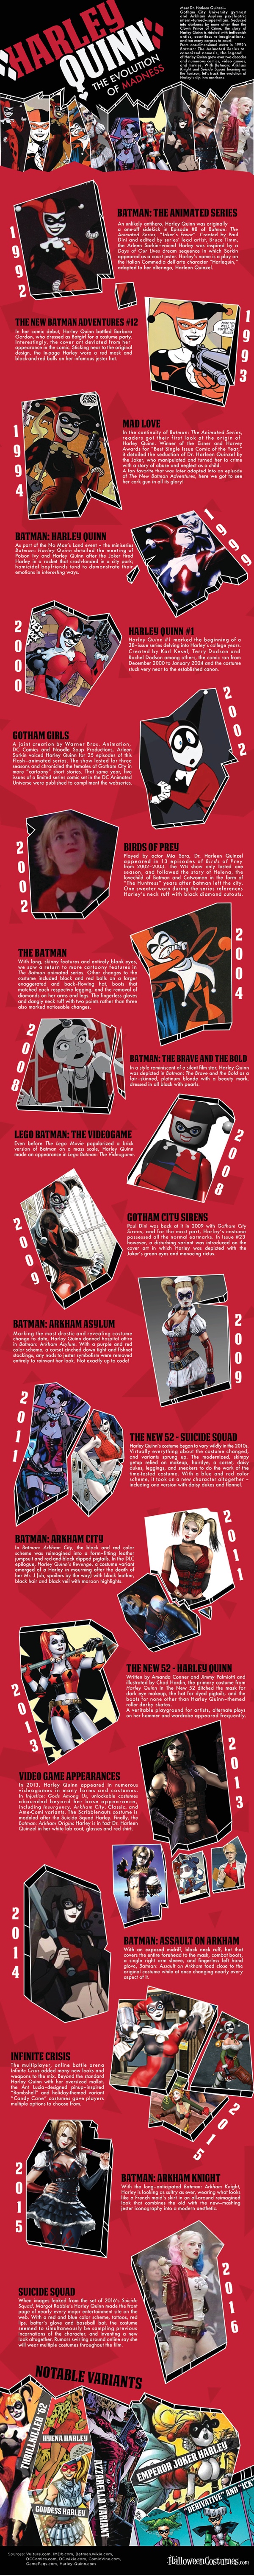 Harley Quinn History.jpg